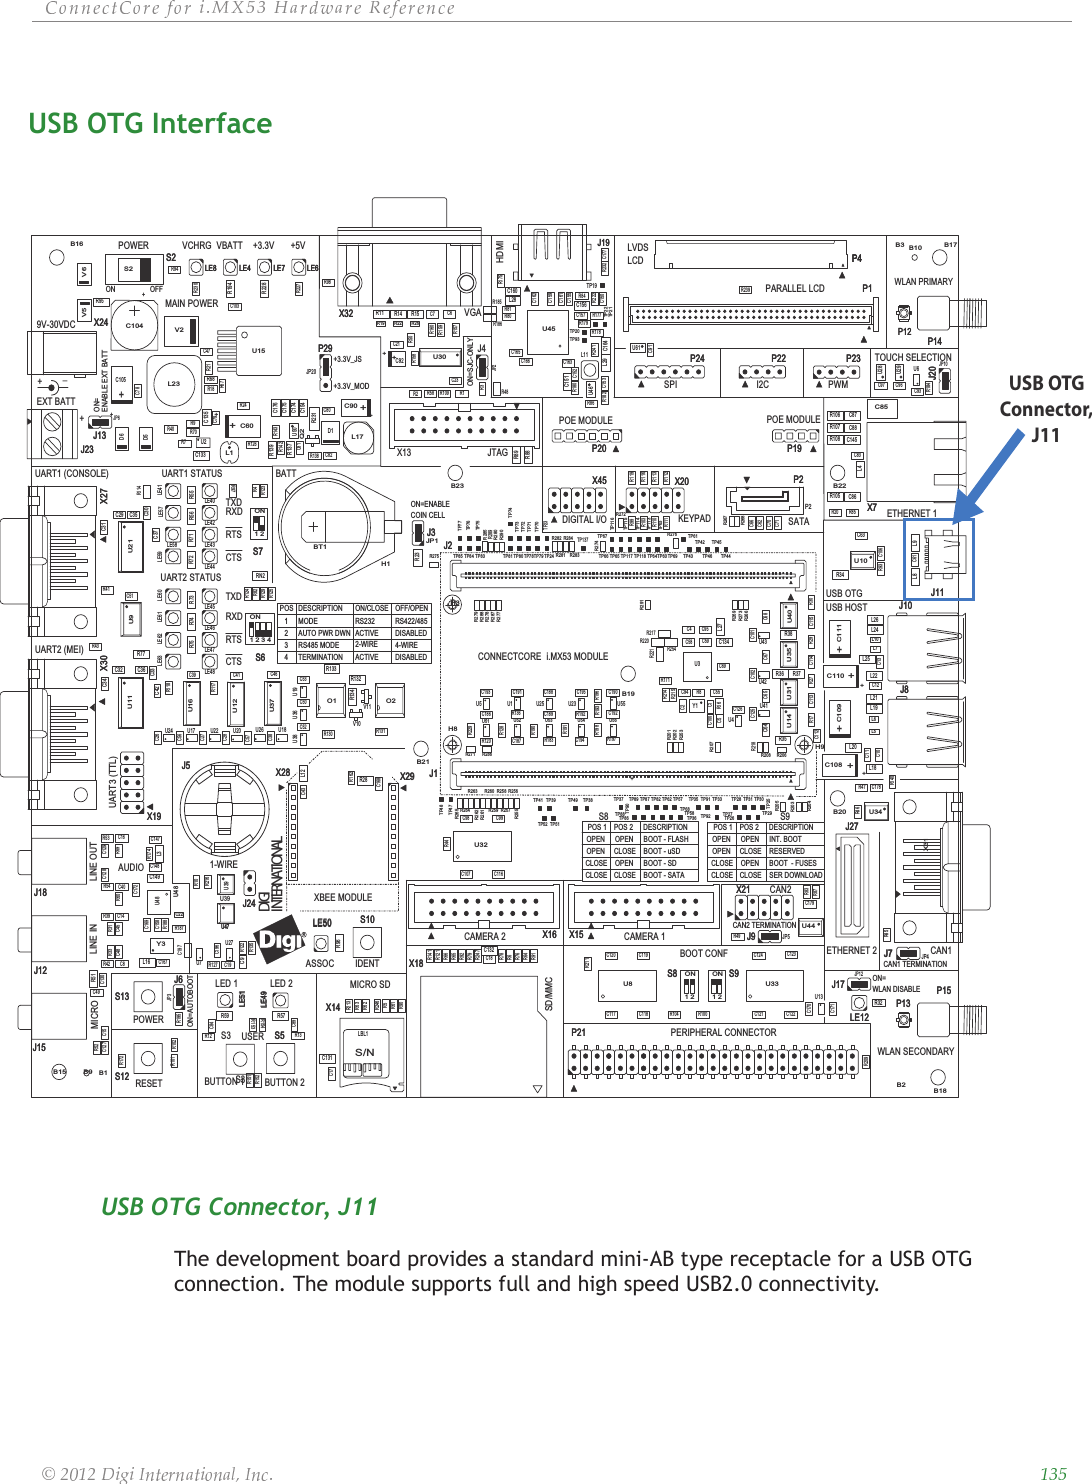 ȱ ȱ ȱ ȱ ȱ ȱȱ ȱ ȱ ȱ ȱȱȱUSB OTG InterfaceUSB OTG Connector, J11The development board provides a standard mini-AB type receptacle for a USB OTG connection. The module supports full and high speed USB2.0 connectivity.RR177R213R175R179R43R178R140R209U21U37J10H8R180R232R44J1X30R129R82R204R124R125R152R68R151C70C120C37C35C15C65C67C68C36C4C5C42C29C32C34C33C64R143C31C152R142L11R118R172R205R4R123C169R61R62R63R90R222R215R48R117R64R76R78R141R66R79R121R65R92R91R217C43R218R21J15C13C12H9C47C61C11L17D1C151C164R139R228C156C132C134C160C131C49L23Y1R241R47R246C176R30R17U9R93R27C153C53C39C27C159C161C106C46C28U52C162C57C155C157C163C113 C1 14C115C126C101C125C102C69C100C95C94C59C51C56C41C26C18C50C38R208C83C55C71C112C58C150C89R137R191C171R227C78U53C166C165C177R221C175C84C170C40R29C52R20R53R54R12R13C154+C109++C108++C110++C111R52+C105+L10L6L7R86C129C128C127J24D5C104+R36U45U12U16U43R37R34R127R38C196R8C85R42RN2R5C88C87C145C9R16C174R6C7 C6R14C86C2C1R41R18R106R108R107R85R56R98R71R75R77R74R55R73R59R72R70R57R51V5L8J12J18P14P15S/NLBL1J23LE51LE49LE40LE43LE42LE44LE47R32LE48LE59LE62LE63LE61 LE 41LE57C118LE60LE45LE46LE58U10U35U31U14 U40X14X27V2S12P12P13R182V6L26L27L21L19L22L20L25L24L18L28L29R105J8P19J11P20X7X32J19U15U42U41U4U20U22U17U36 U19U24U18U26U13U38U46R100X19P21R289C17J2X24X18U11R9H3S5S13ON12S7ON4132S6U50B3B2B1B10B9B15B17B16B18B19B21B23B22B20U3X16C63C19C10C135C103R84LE7L4L9C123R31U29C187R275C98C167C117C119R211Y3R39LE6C79U25D6C30C62R274C121J3R278R287R273R261R269C188R193R206R253U51R190X15X31R110U54R202R281U1R203R196C191U23JP2C179U8R103R99C21C99R157R285R159R290R136R277U6R284C194JP6R35R247C66C97P4P4R266R257C122C189C195R280LE12L12U7R187C158C48C8X21C193C186R230R194JP20C124R183R282R192R258R23R128R259R120R260P2P2U2P1C96U33R160C82R276H1R113R138R58R231+C90+C133+C92+C197R83R135R2X45R111P24 P22L5LE4R24LE8R267R94R95S2S2J13R15R11R195R45S10+C60+C80J17R7J6R239R81J20JP1R22R26R19R126R119LE50R158U32JP3JP10C91U28R46JP4L16U61R3C93J4JP12R96C178J27J7U34R184X20R102R101C22C45C23R188R33C14C130C16R216R69R60U48U48J5J5X29X28U27R104U39U39R50R40R67R286C148C149R174L3C147R198R283R201P23U5R262R263R255R256R265R264R207R271ON12S8ON12S9U47U47R112R80R1C81R87JP5U30BT1R109J9R49C116C107U44R116P29R88R122R89L1Q2R268X13C172R114R97R288R272R279R186R185R220R229R254U55U56C190C192R197O1R154R130O2R153R133V10V11R134R132R131C168R28R162R214R171R10S3R291TP83 TP44TP85TP61TP90TP114TP67TP66TP115TP69TP116TP71TP117TP74TP78TP80TP63TP118 T P64TP22TP21TP20TP19TP46TP72TP45TP60 TP4 3TP84TP42TP79 TP6 5TP73TP113TP137TP70TP23TP24TP81TP47TP48TP77TP76TP75TP93TP38TP49TP52TP51TP39TP41TP25TP82TP89 TP8 7TP62TP29TP30TP31TP28TP91TP33TP35TP57TP26TP37TP88TP86TP68TP58TP36TP92TP27X14J17 P15S8CAN2S6SATAPWMP21ON=WLAN DISABLEJ19POE MODULEJ12POWERX27 ON=P29S9CTSRTSS5_I2CX21CLOSERXDJ1+3.3V_JSPERIPHERAL CONNECTORX19SER DOWNLOADJ18+3.3V_MODDIGIS8IDENTDISABLEDP22+AUDIOUART3 (TTL)AUTO PWR DWNJ13+P13VCHRGON/CLOSEP4RESERVEDCAN1 TERMINATIONTXDCLOSEUART1 STATUSX30OPENP12UART2 (MEI)LE51ETHERNET 1POE MODULESD/MMCOPENX209V-30VDCSPI3LE49X15RS485 MODE+5VDESCRIPTIONVBATTJ81DISABLEDJ10MAIN POWERP24J11LE8USERJ3ACTIVEOPEN4BUTTON 12-WIREUSB OTGLVDSLCDOFF/OPEN4-WIREACTIVEX32POSINT. BOOTVGADESCRIPTION2MICRO SDCTSX28WLAN PRIMARYJ27X45MICRO1-WIREJ15RTSBOOT CONFINTERNATIONALETHERNET 2LE50CAN1WLAN SECONDARYPOS 2J9P1X29J24LED 2LE4X18S13PARALLEL LCDS3S12XBEE MODULEOFFP2J2ON=AUTOBOOTBATTJ20i.MX53 MODULEPOS 1J7CLOSE OPENRXDUART2 STATUSBOOT  - FUSESX16RESETS9TERMINATIONP14LINE INP19HDMIP20LINE OUTASSOCCLOSELED 1CAN2 TERMINATIONS7X7J6BUTTON 2J23P23S2LE6LE7S10KEYPADMODECAMERA 2RS232 RS422/485USB HOSTEXT BATTENABLE EXT BATTON=ENABLECOIN CELLX24TOUCH SELECTIONDESCRIPTIONONON=SJC-ONLYUART1 (CONSOLE)+3.3VPOWERLE12DIGITAL I/OCONNECTCORECAMERA 1BOOT - SDBOOT - uSDOPEN OPENPOS 2BOOT - FLASHCLOSECLOSECLOSECLOSEOPENPOS 1BOOT - SATAOPENTXDJTAGUSB OTGConnector,J11